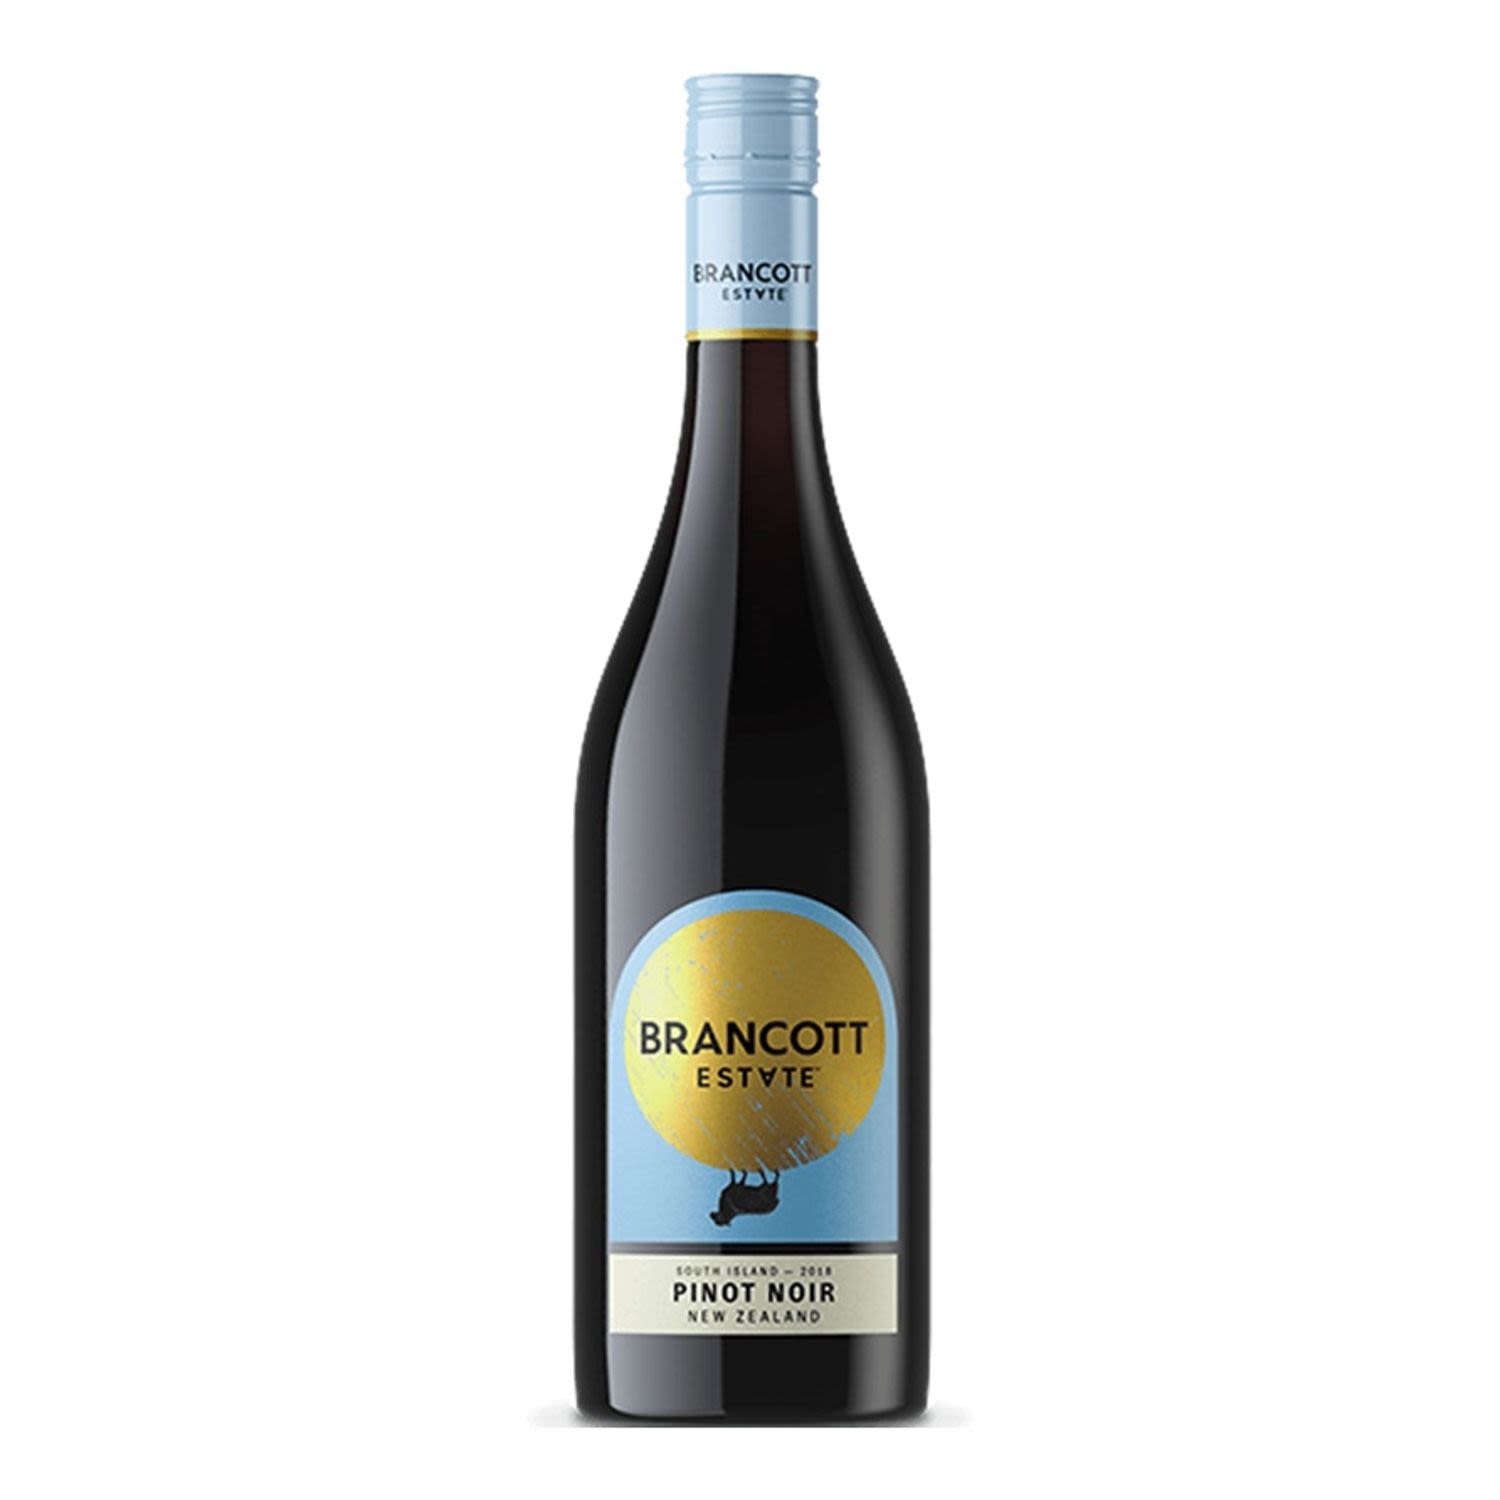 This Pinot Noir shows full fruit flavours, complexity and balance.<br /> <br />Alcohol Volume: 13.00%<br /><br />Pack Format: Bottle<br /><br />Standard Drinks: 7.7</br /><br />Pack Type: Bottle<br /><br />Country of Origin: New Zealand<br /><br />Region: Marlborough<br /><br />Vintage: '2017<br />